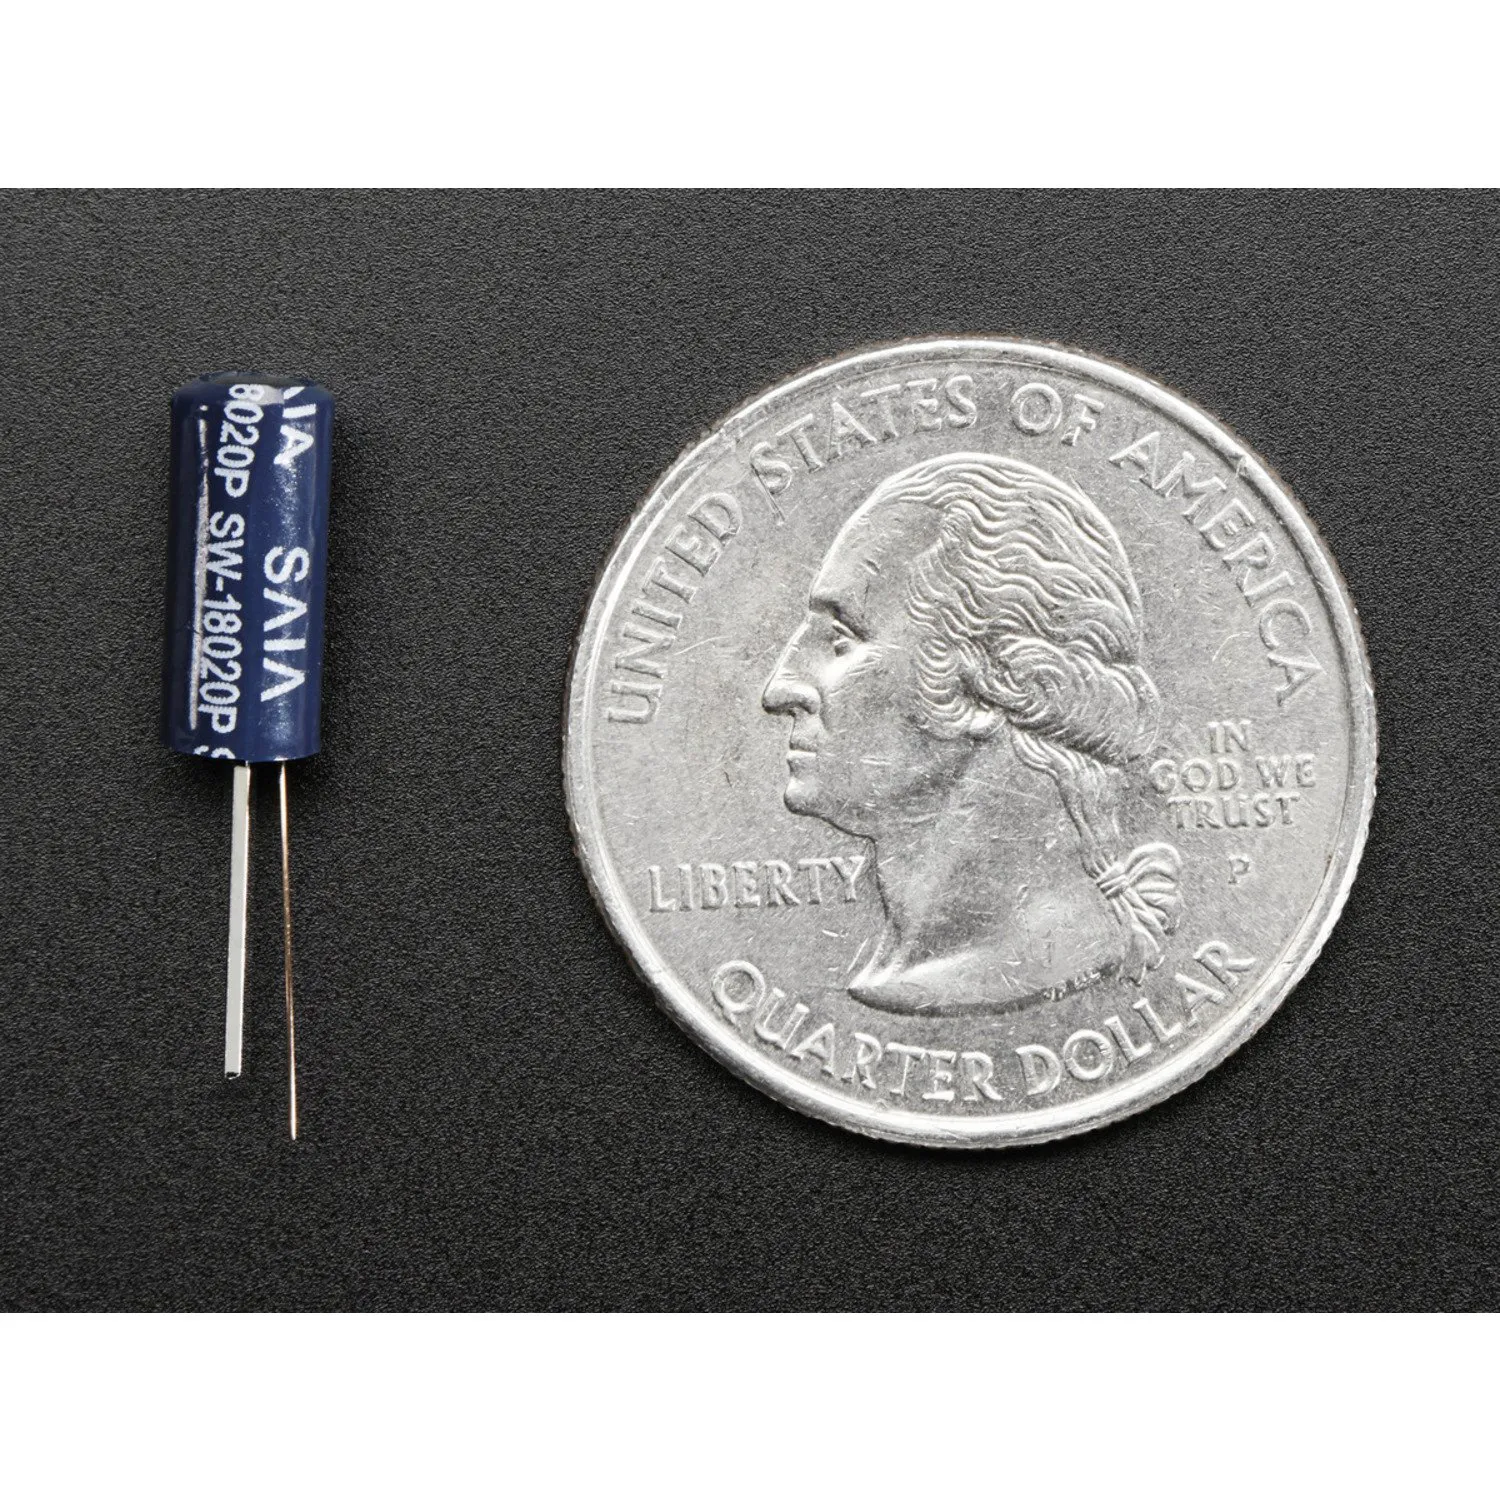 Photo of Medium Vibration Sensor Switch